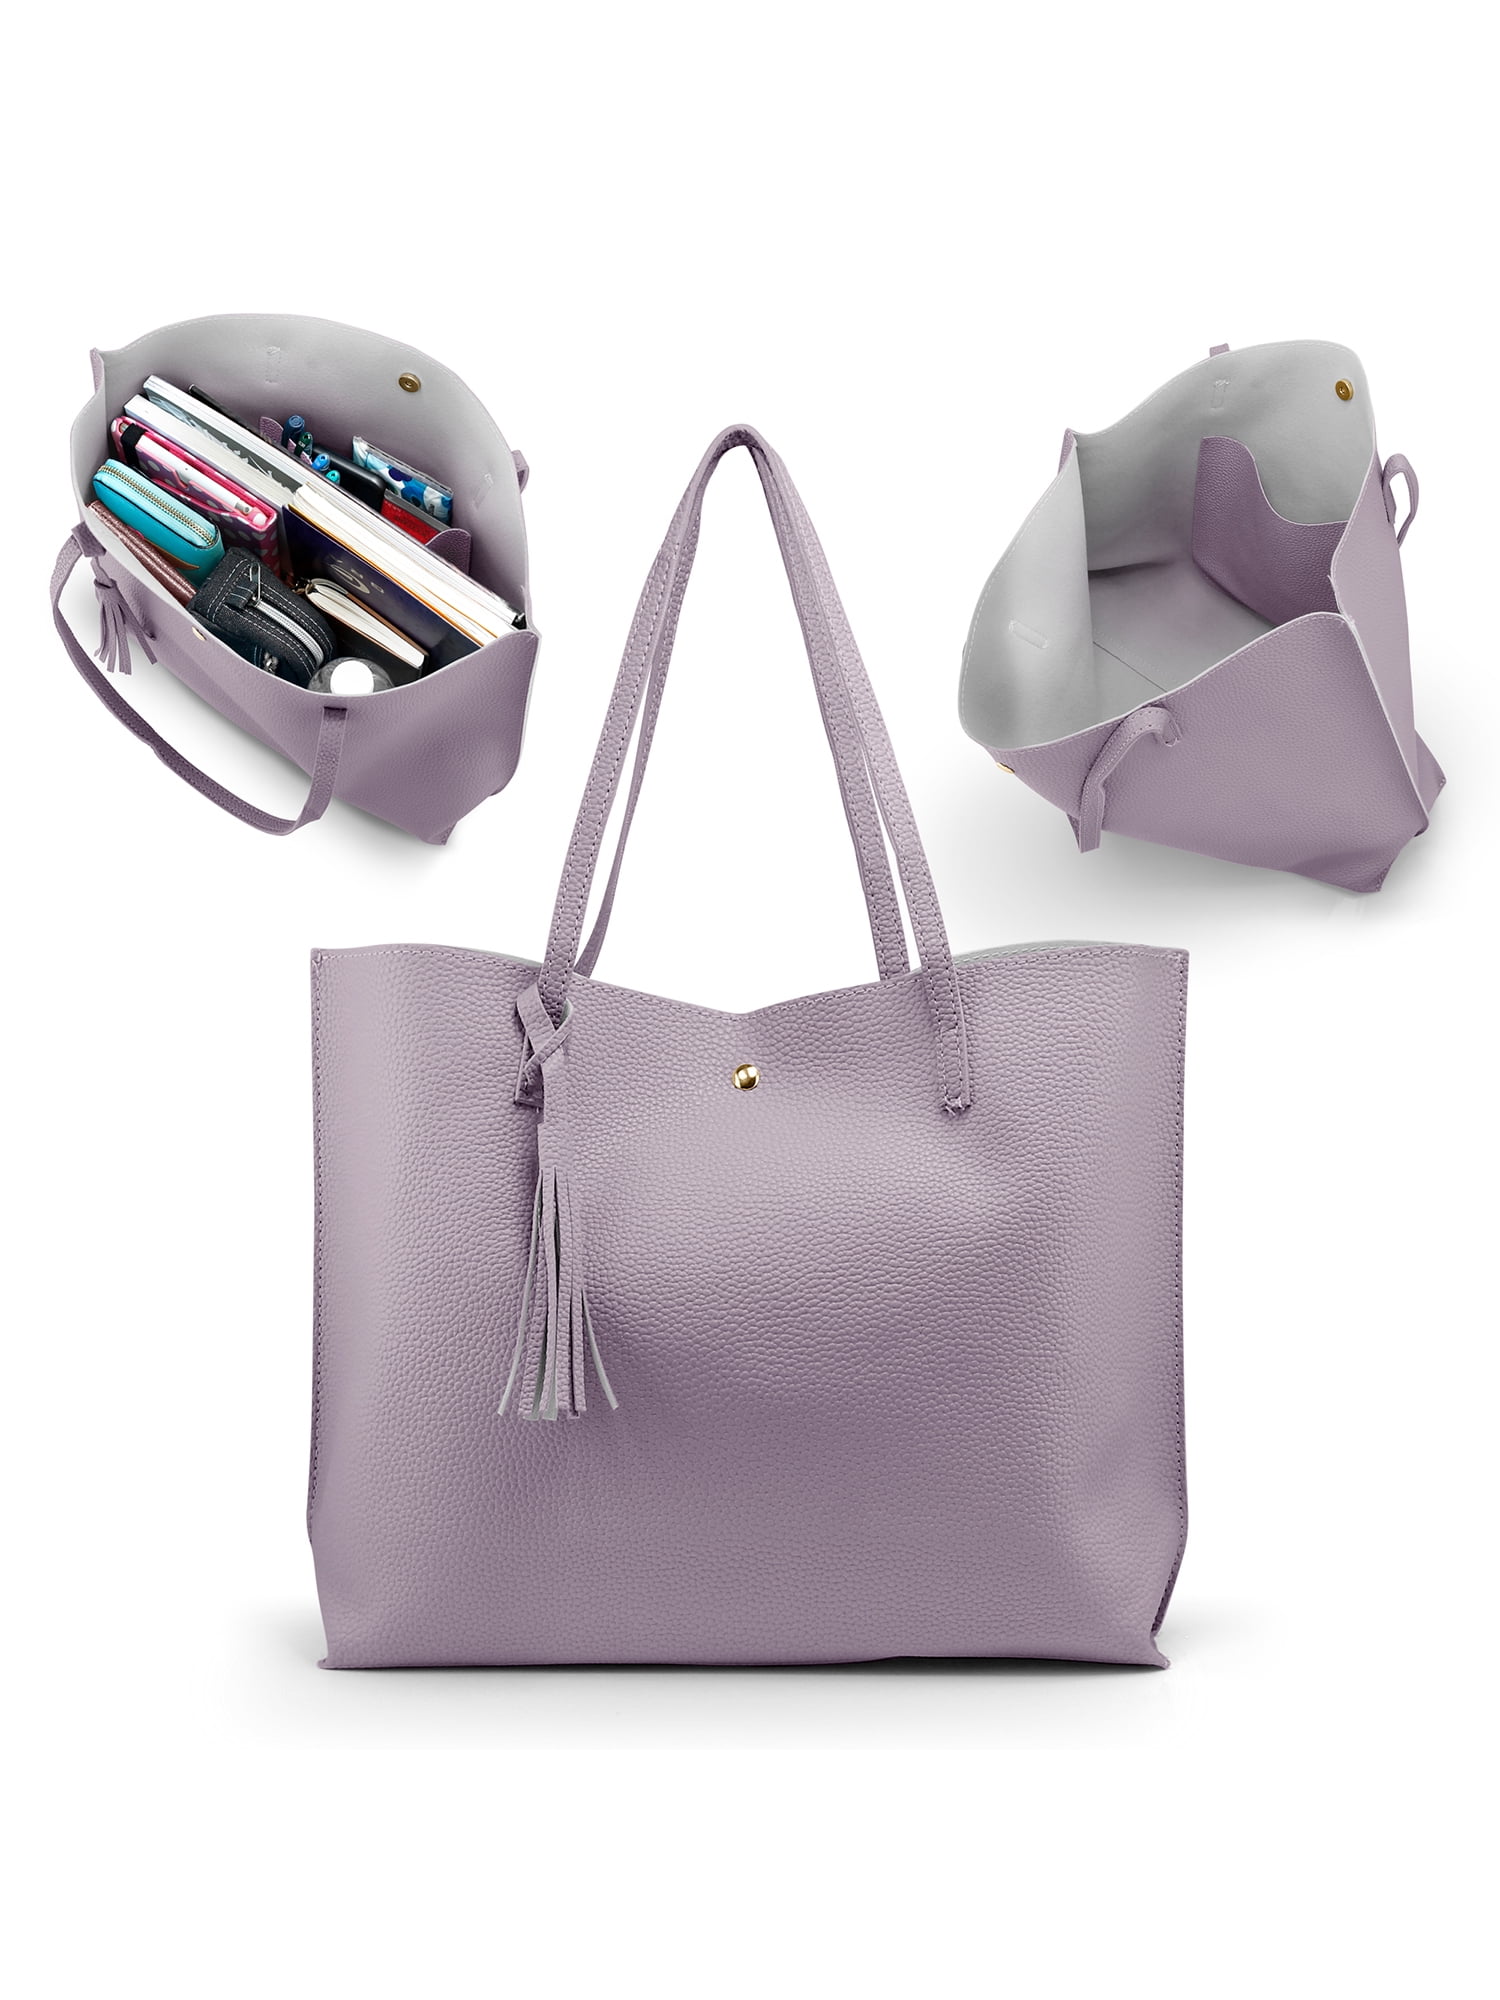 Women Tote Bag Tassels Leather Shoulder Handbags Fashion Ladies Purses Satchel Messenger Bags Purple 6eb11d00 1953 4872 abc7 a737b6fcffb5 1.7738cf44947c831727b3af9df0c039aa